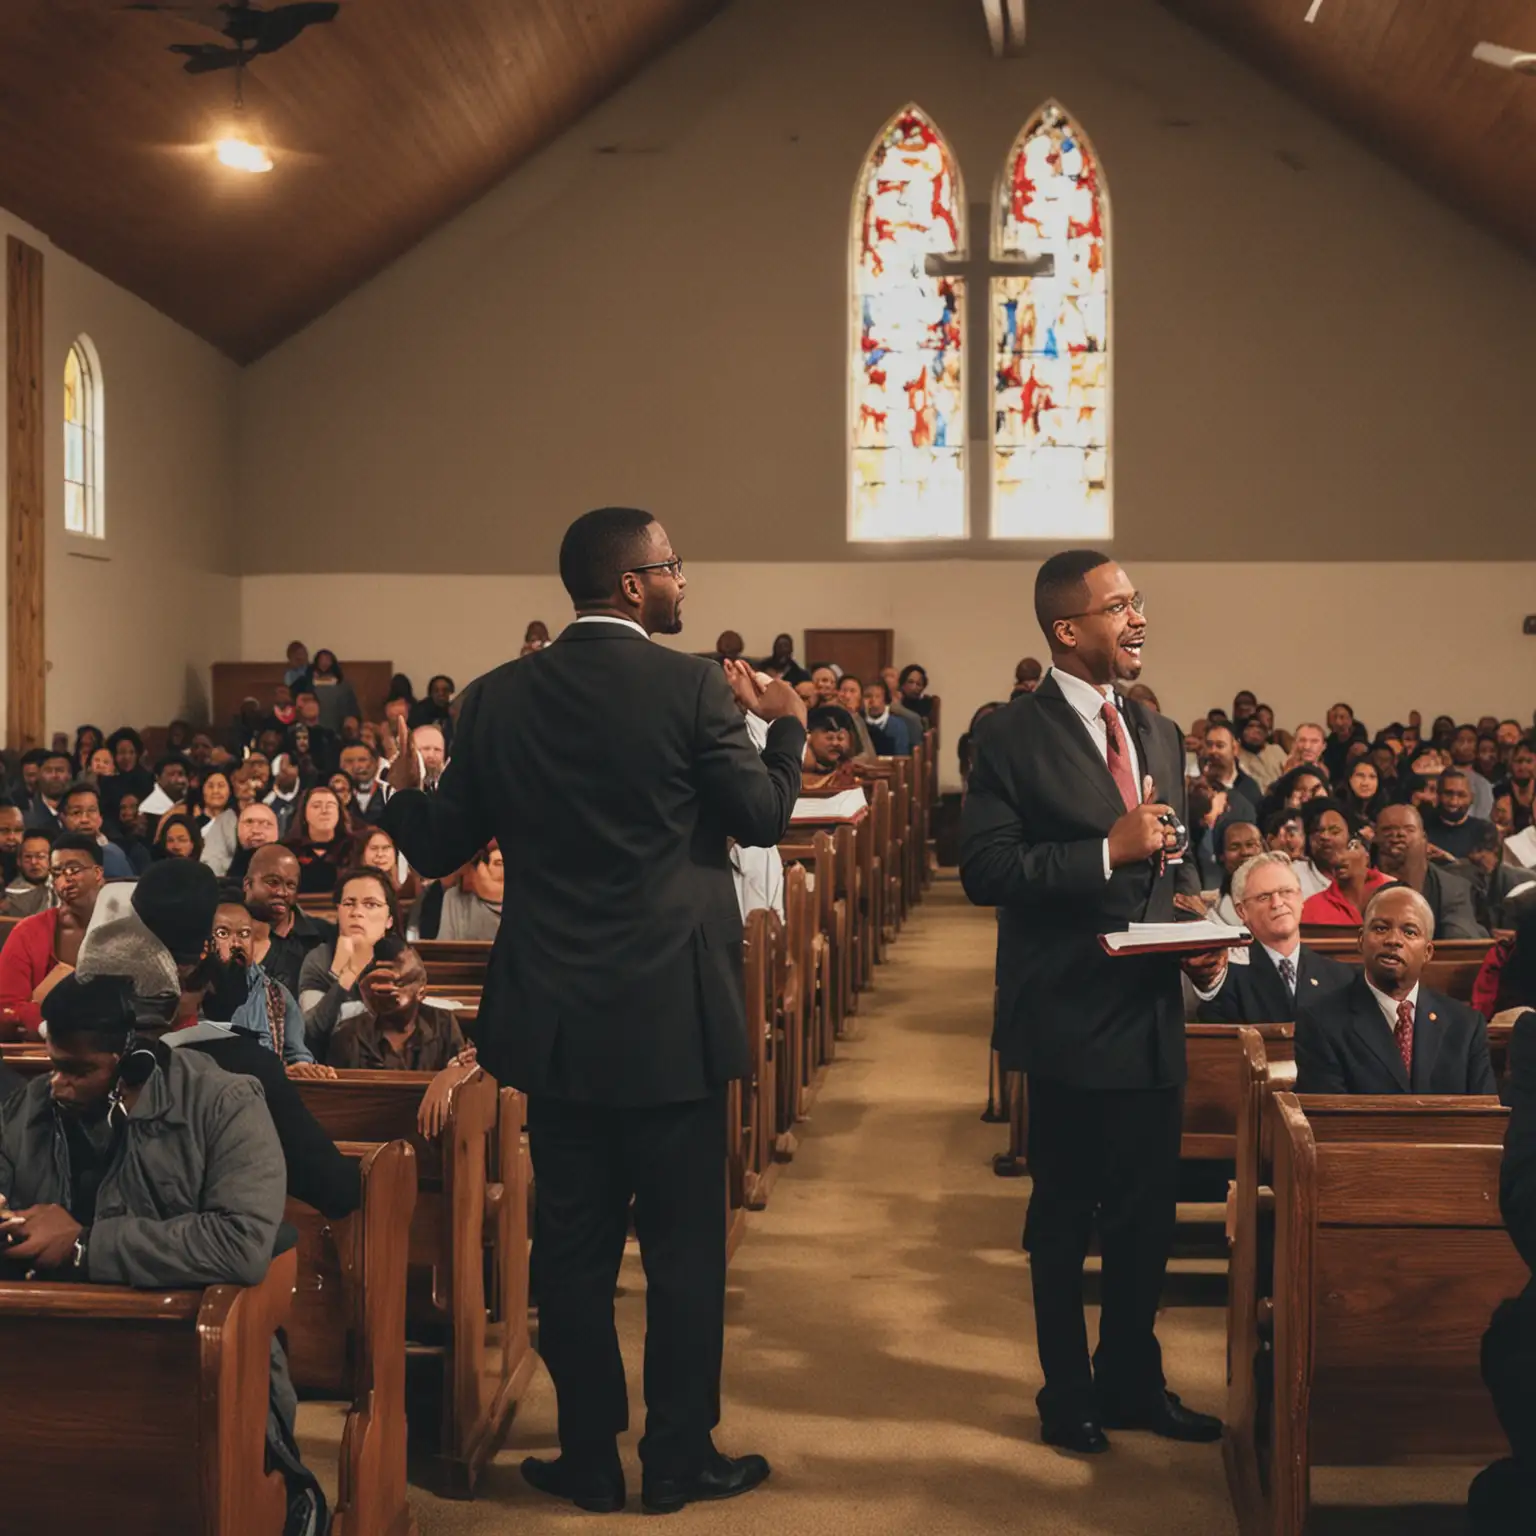 pastors preaching hoping to grow their church